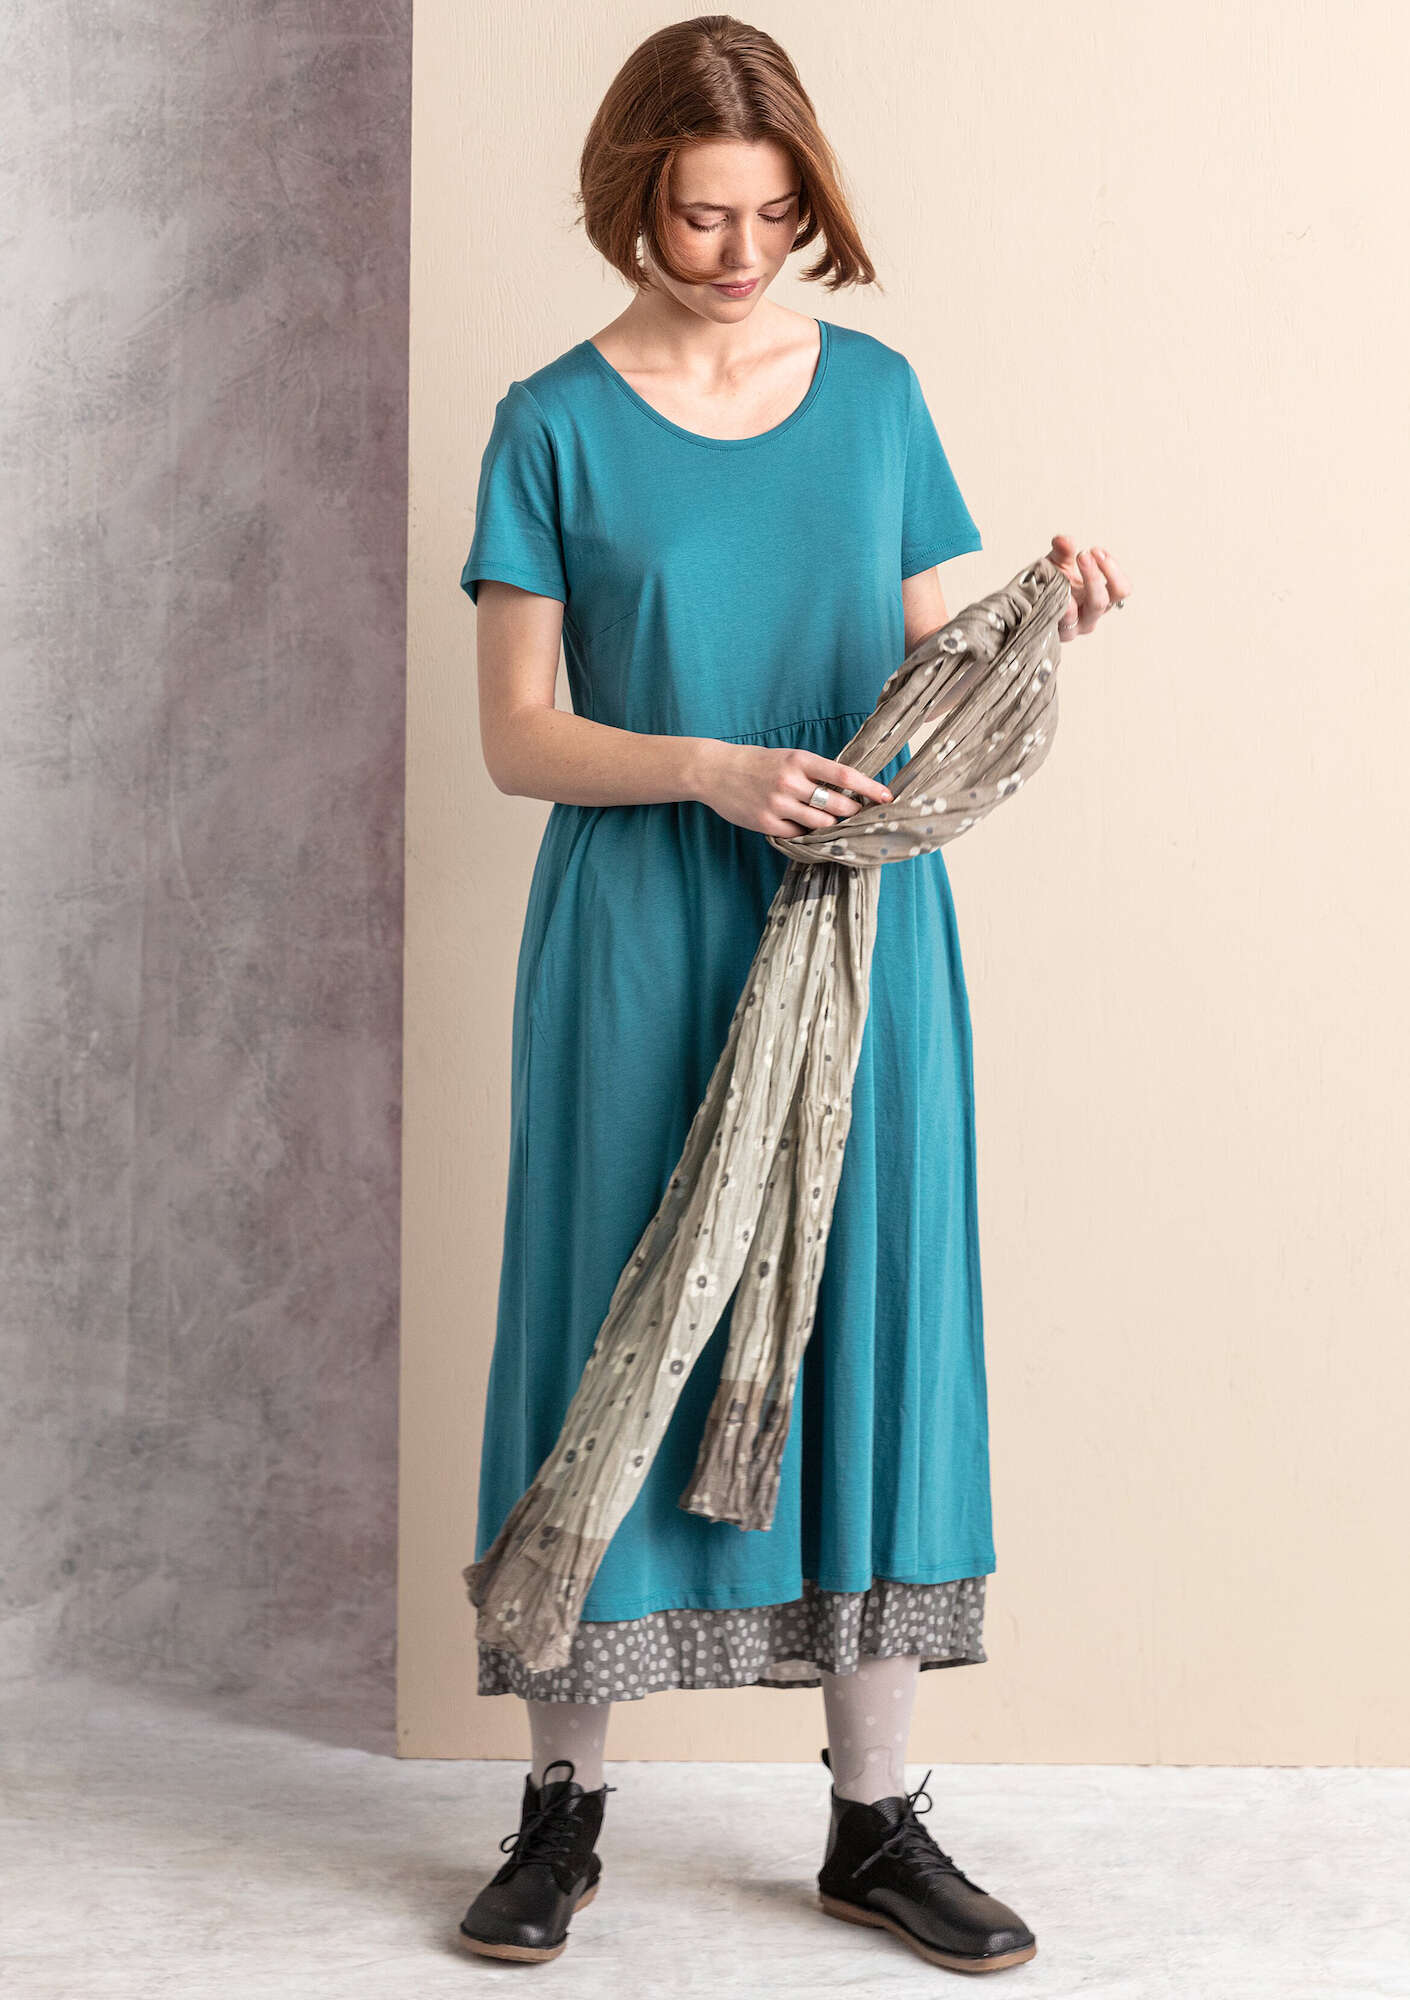 “Isolde” jersey dress in organic cotton/modal indigofera